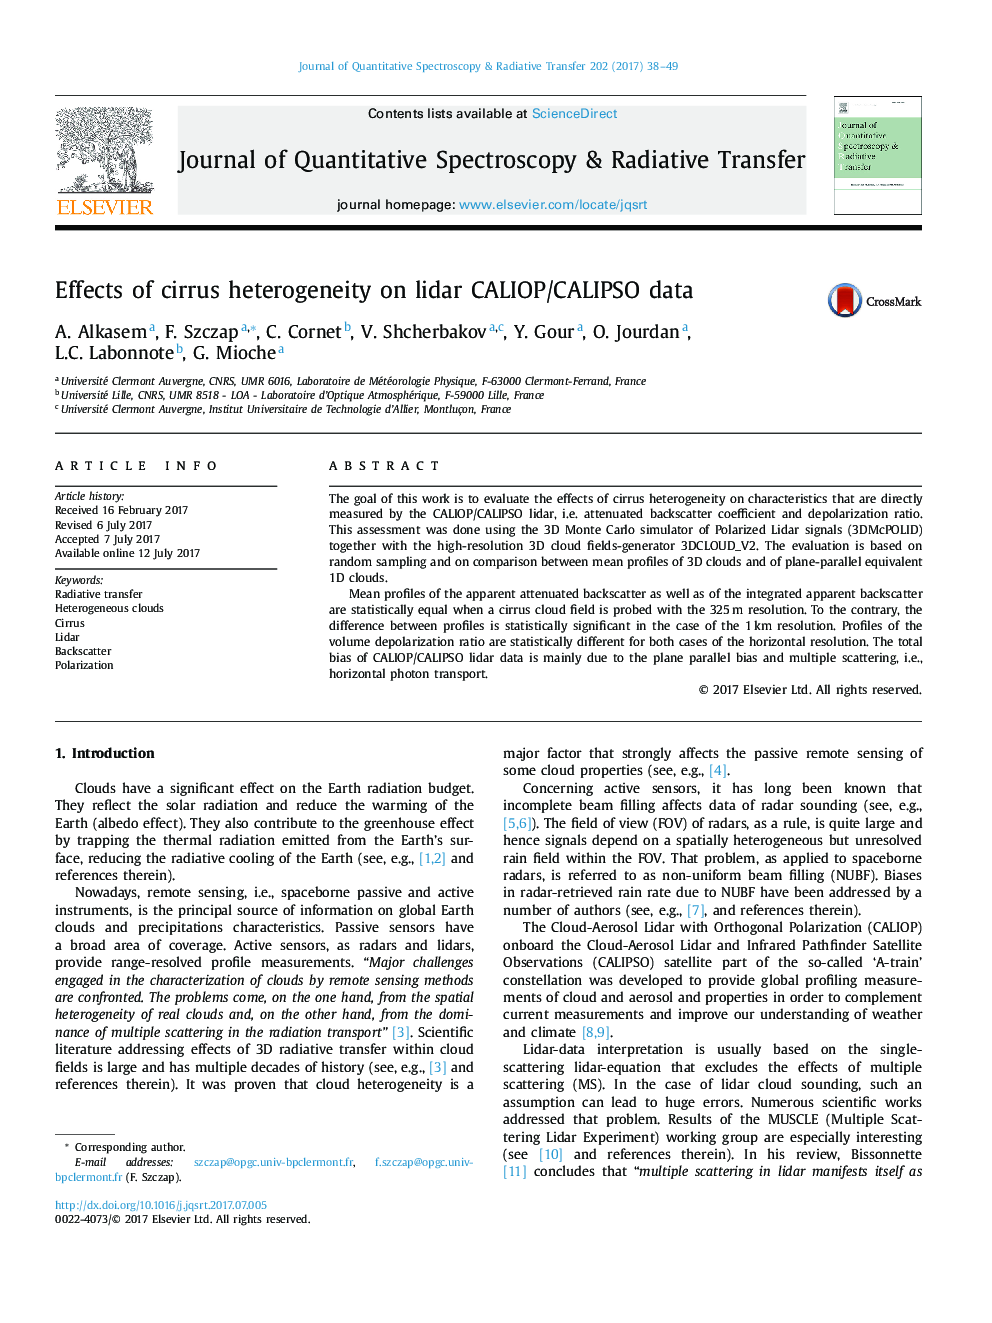 Effects of cirrus heterogeneity on lidar CALIOP/CALIPSO data